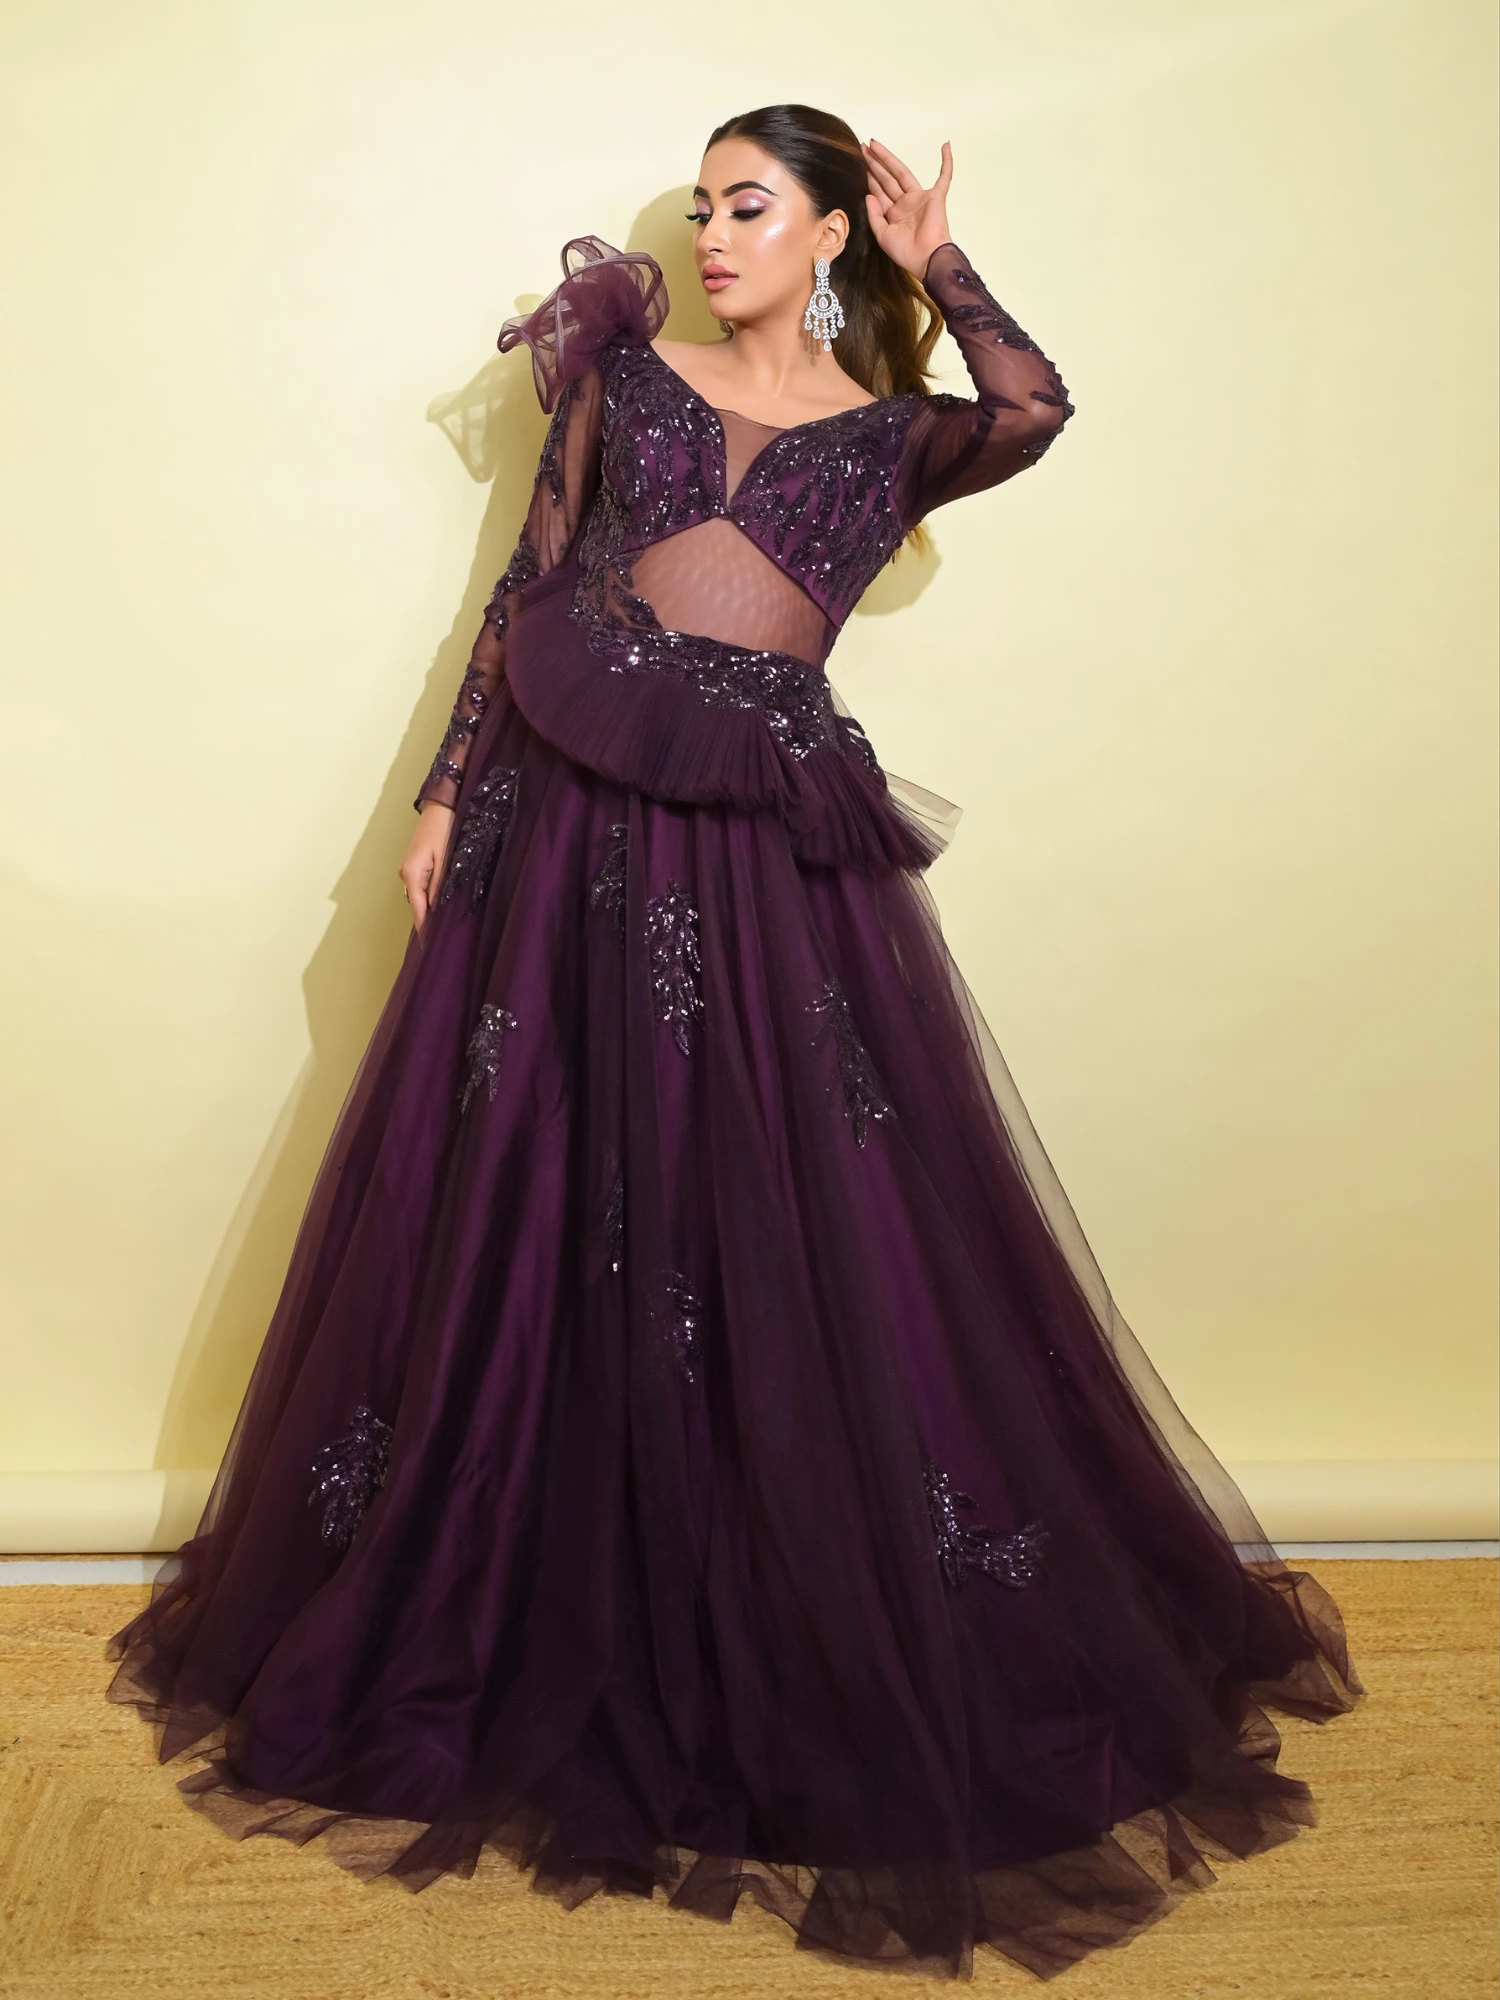 Vietnamese dress ao dai tradional style asian xL dark purple double layers  | eBay